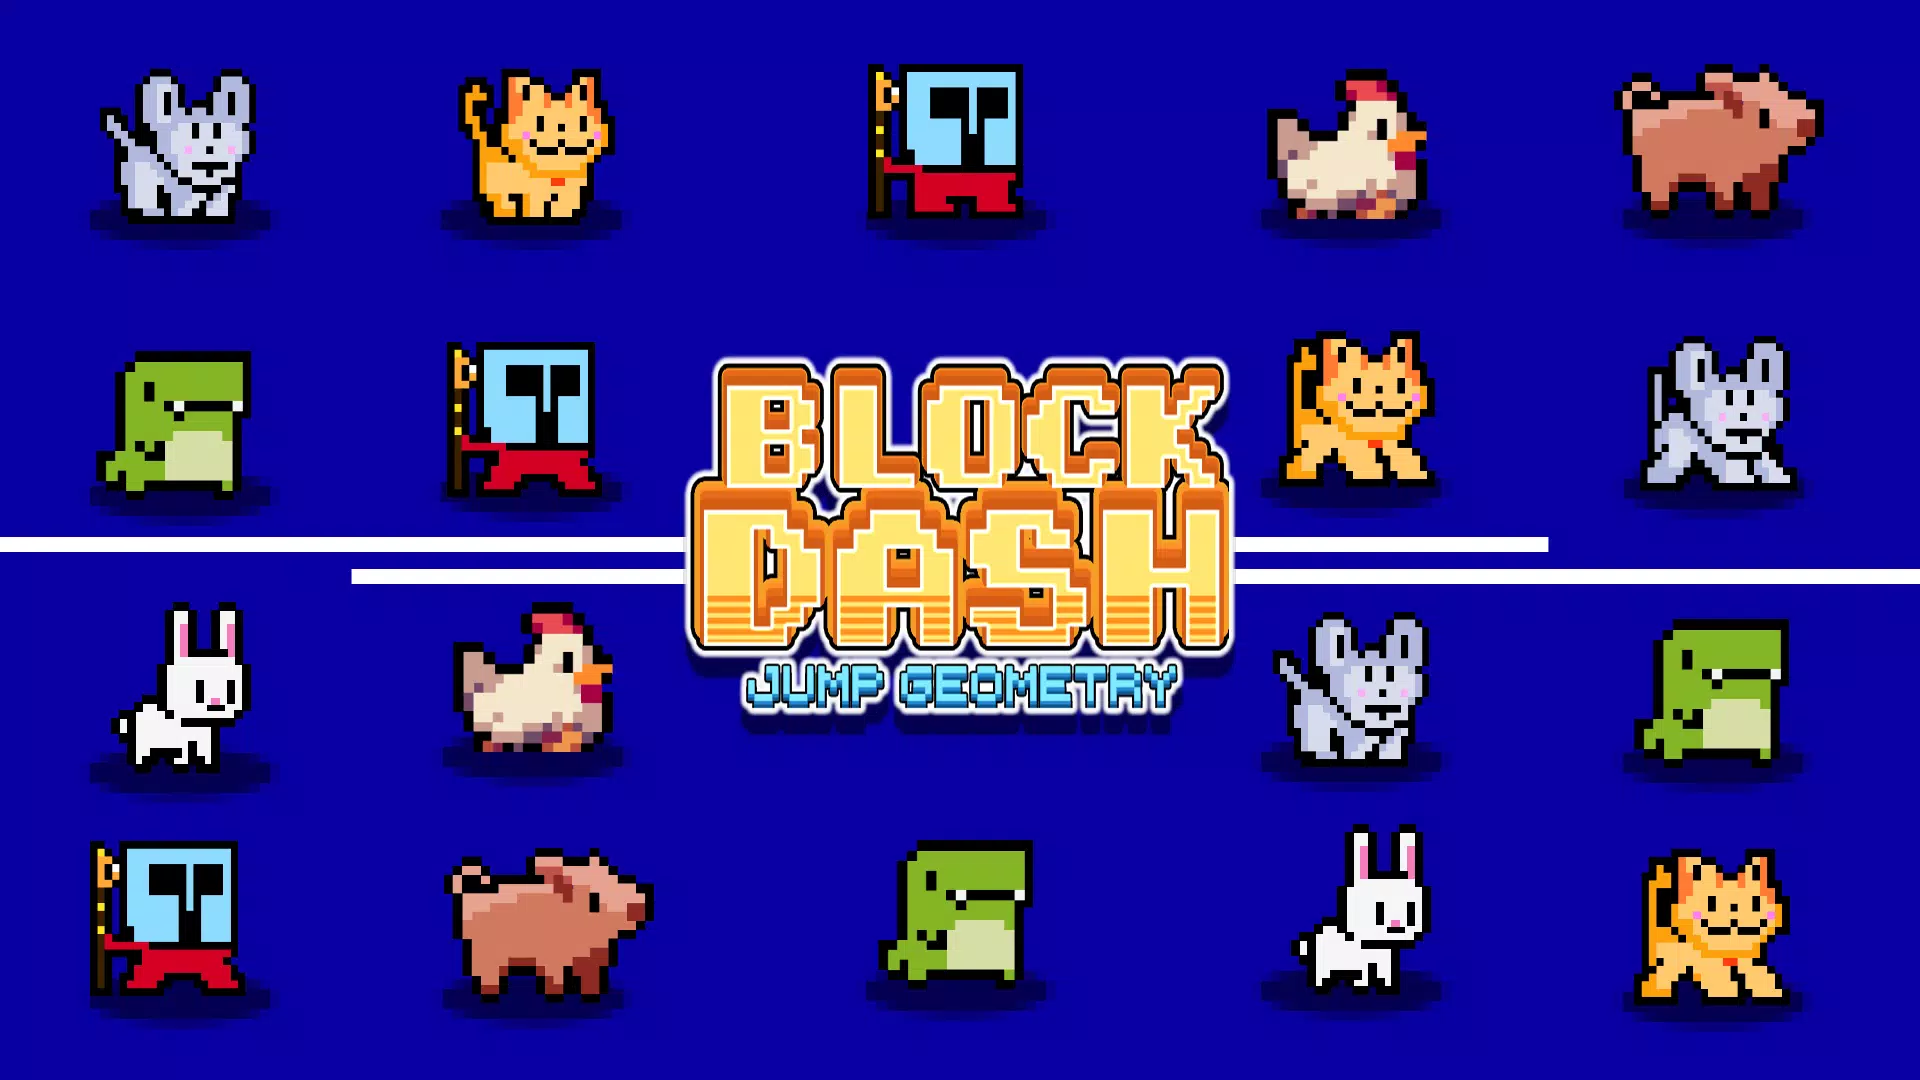 Download do APK de Block Dash para Android